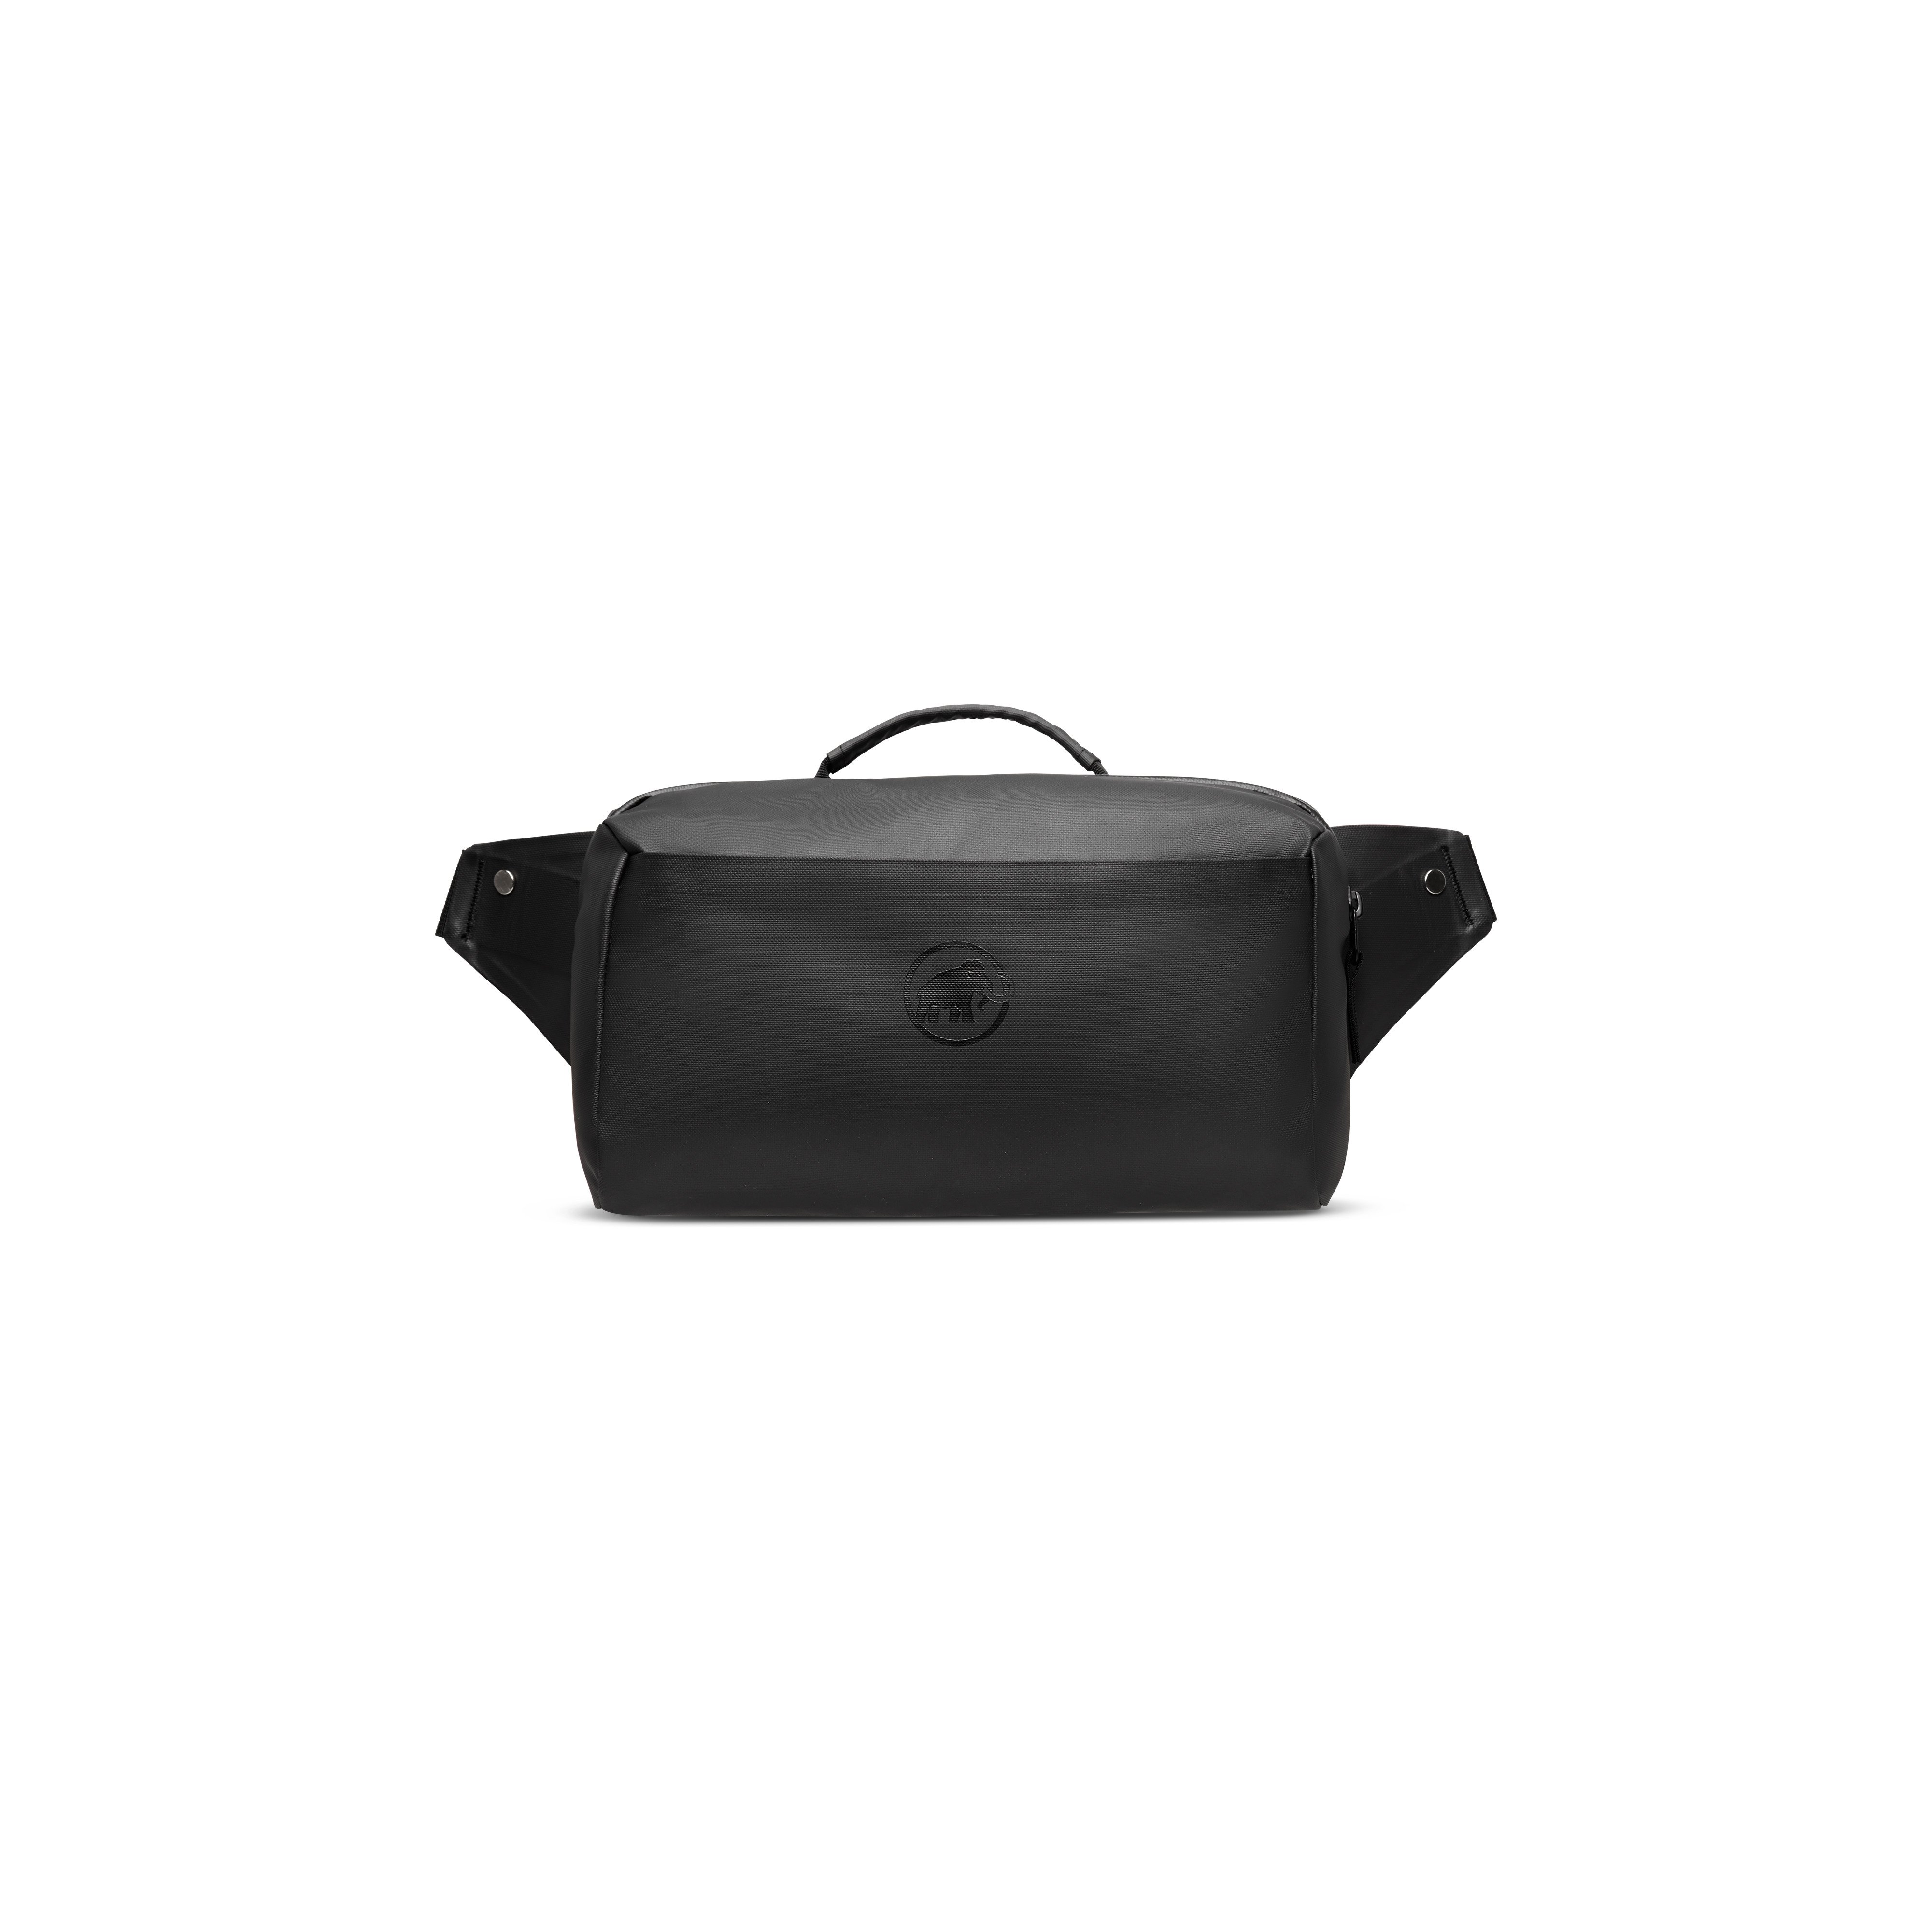 Seon 2-Way Waistpack - black, 4 L product image